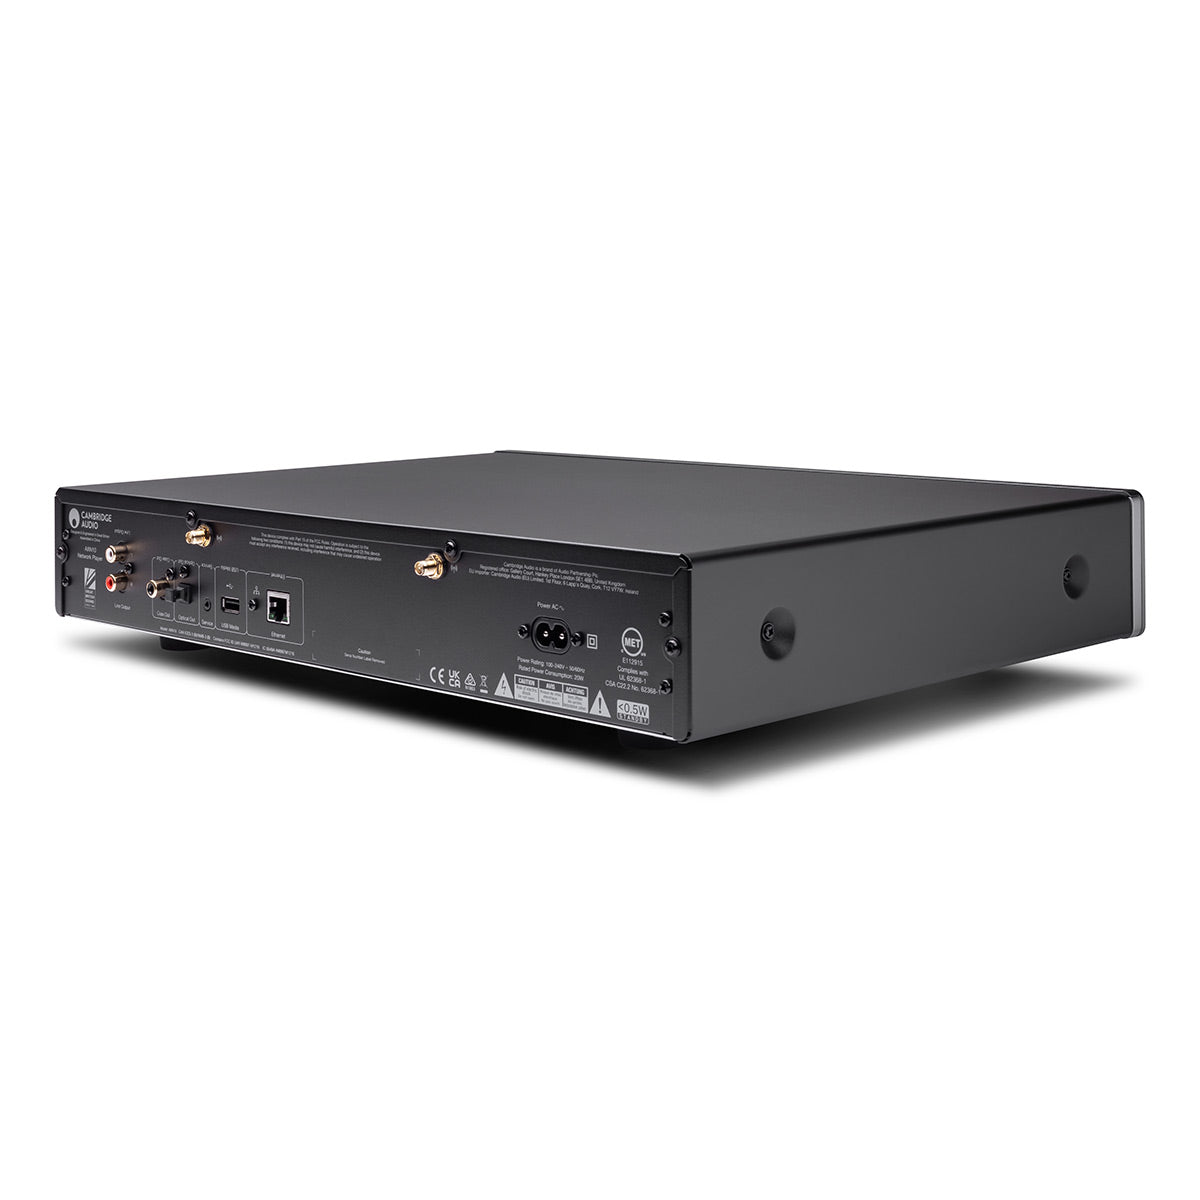 Review: Cambridge Audio MXN10 & AXN10 Network Streamers